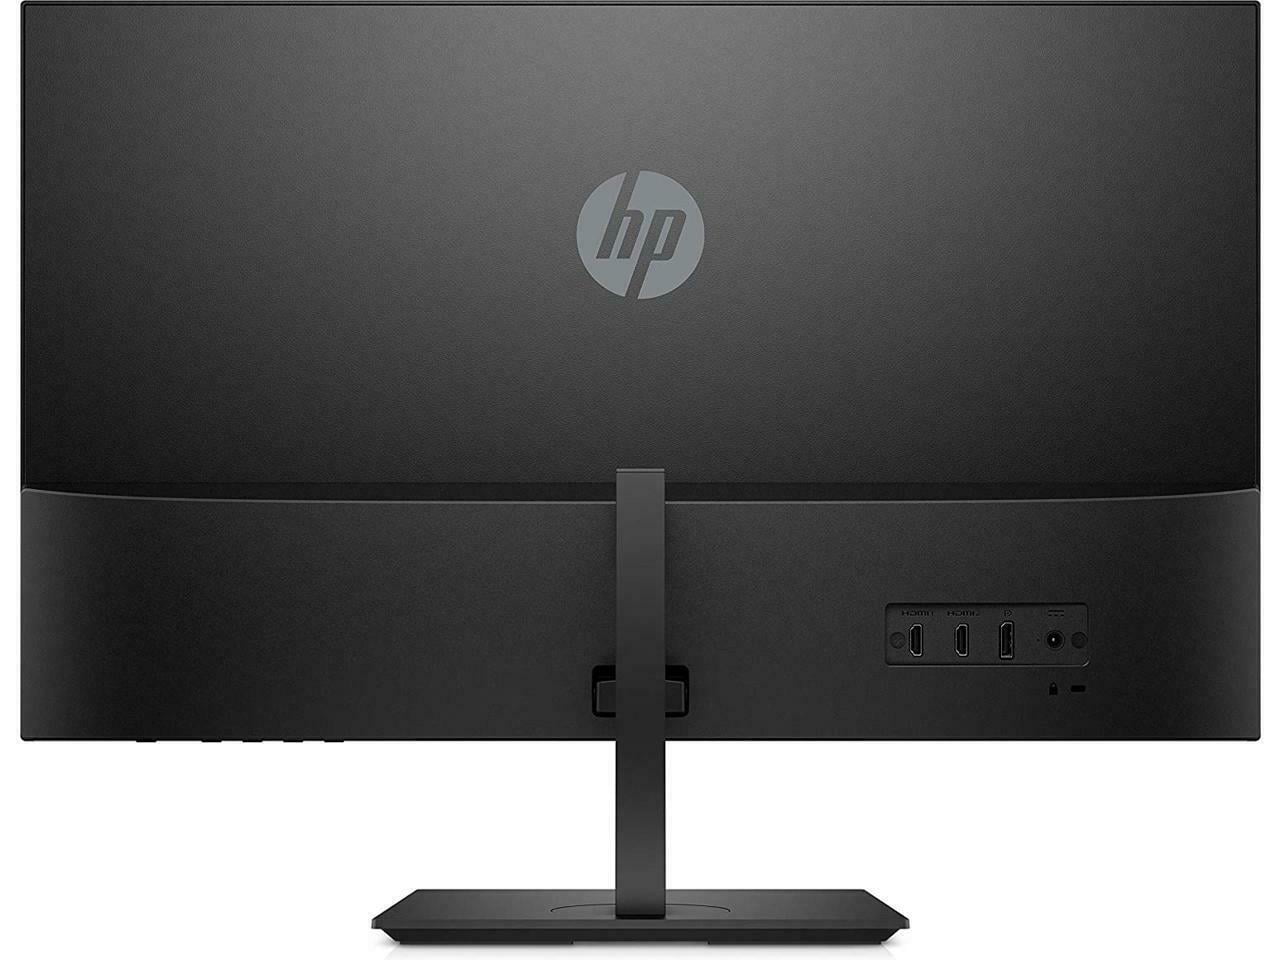 HP f Premium 4K Monitor  4K UHD  x  Hz Refresh